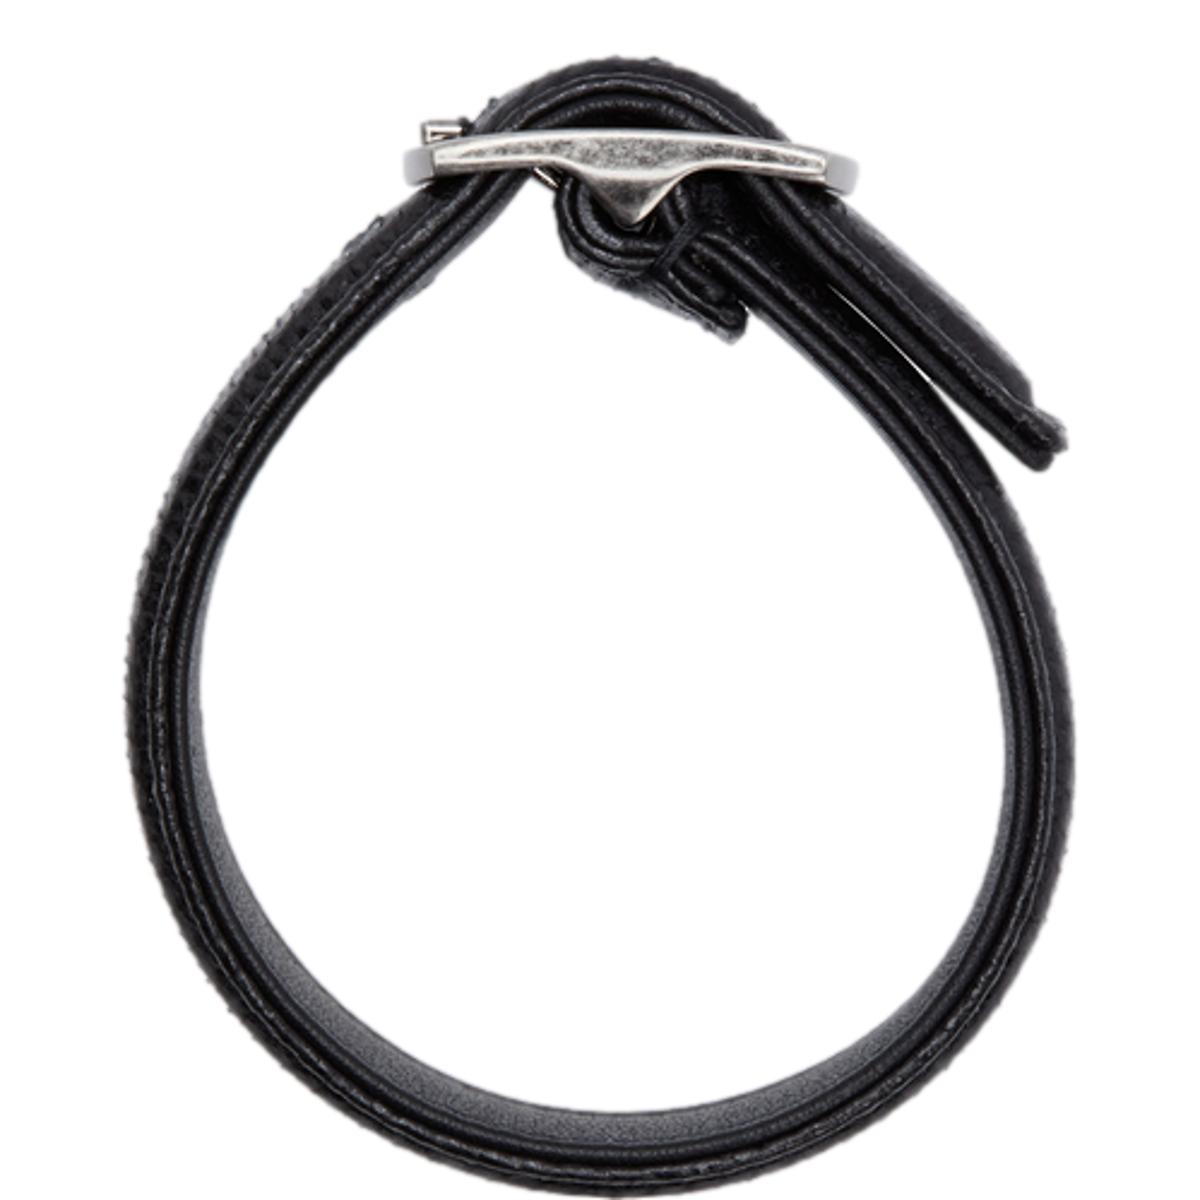 Saint Laurent Black Leather Snake Embossed Buckle Bracelet 634751